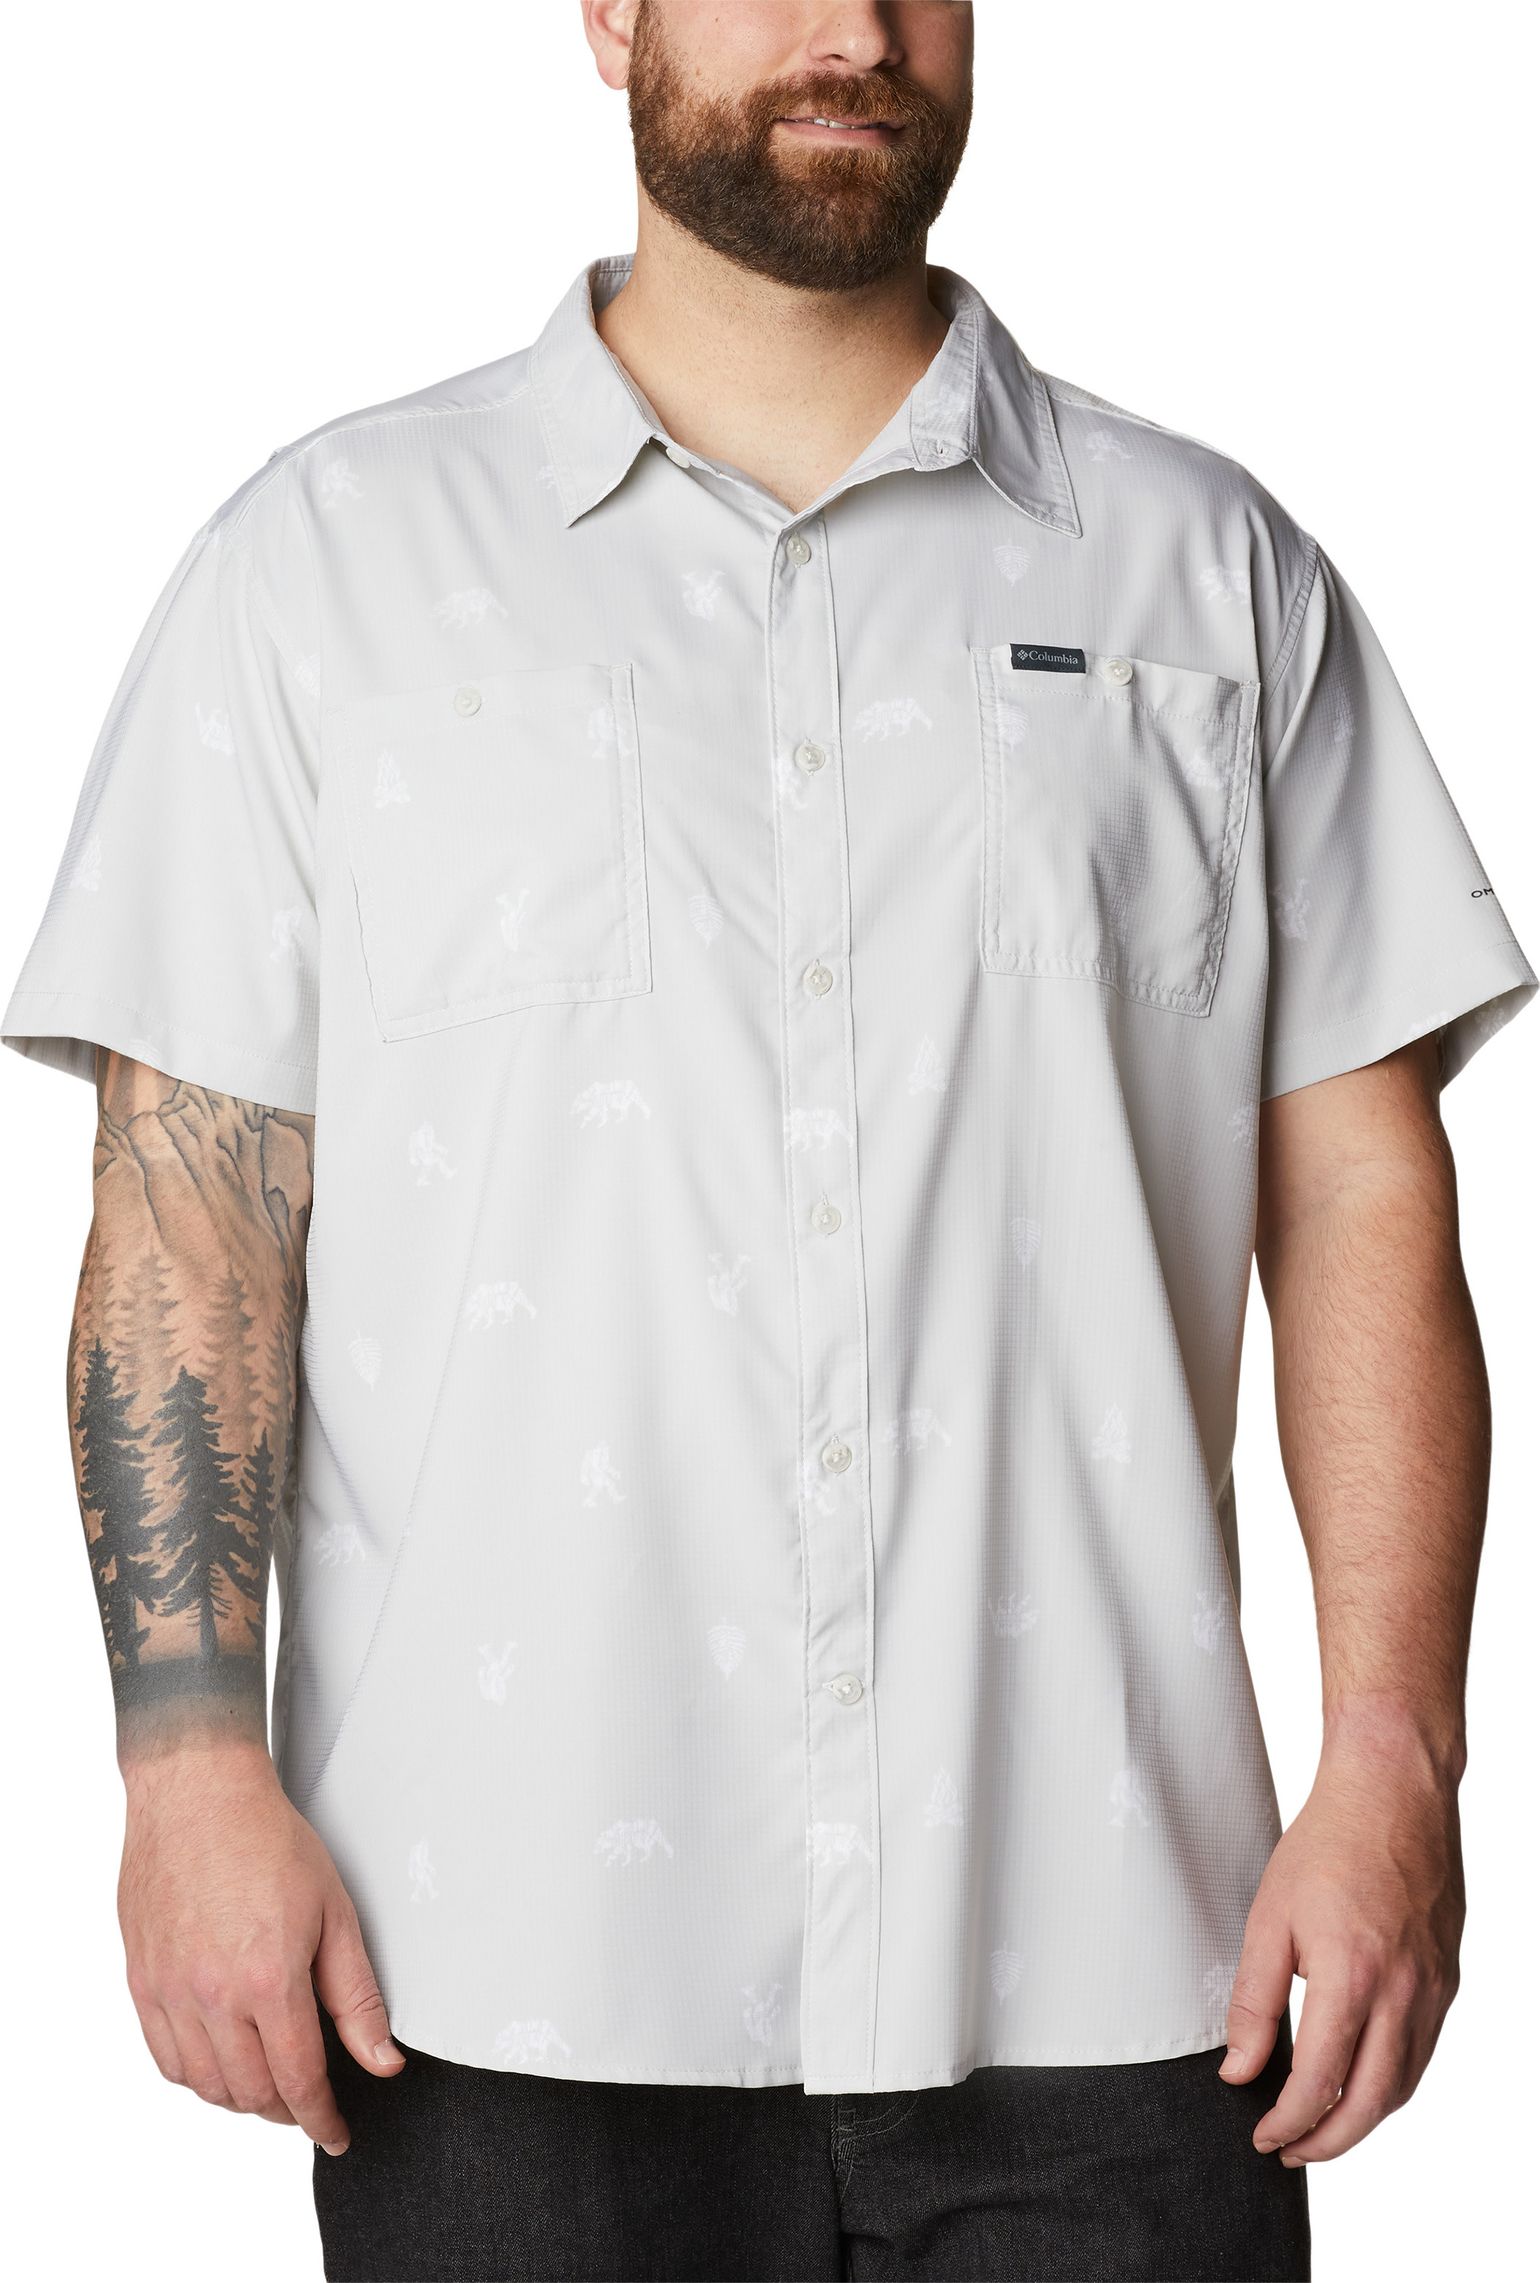 Men's Utilizer Printed Woven Shortsleeve Shirt Nimbus Grey Camp Social